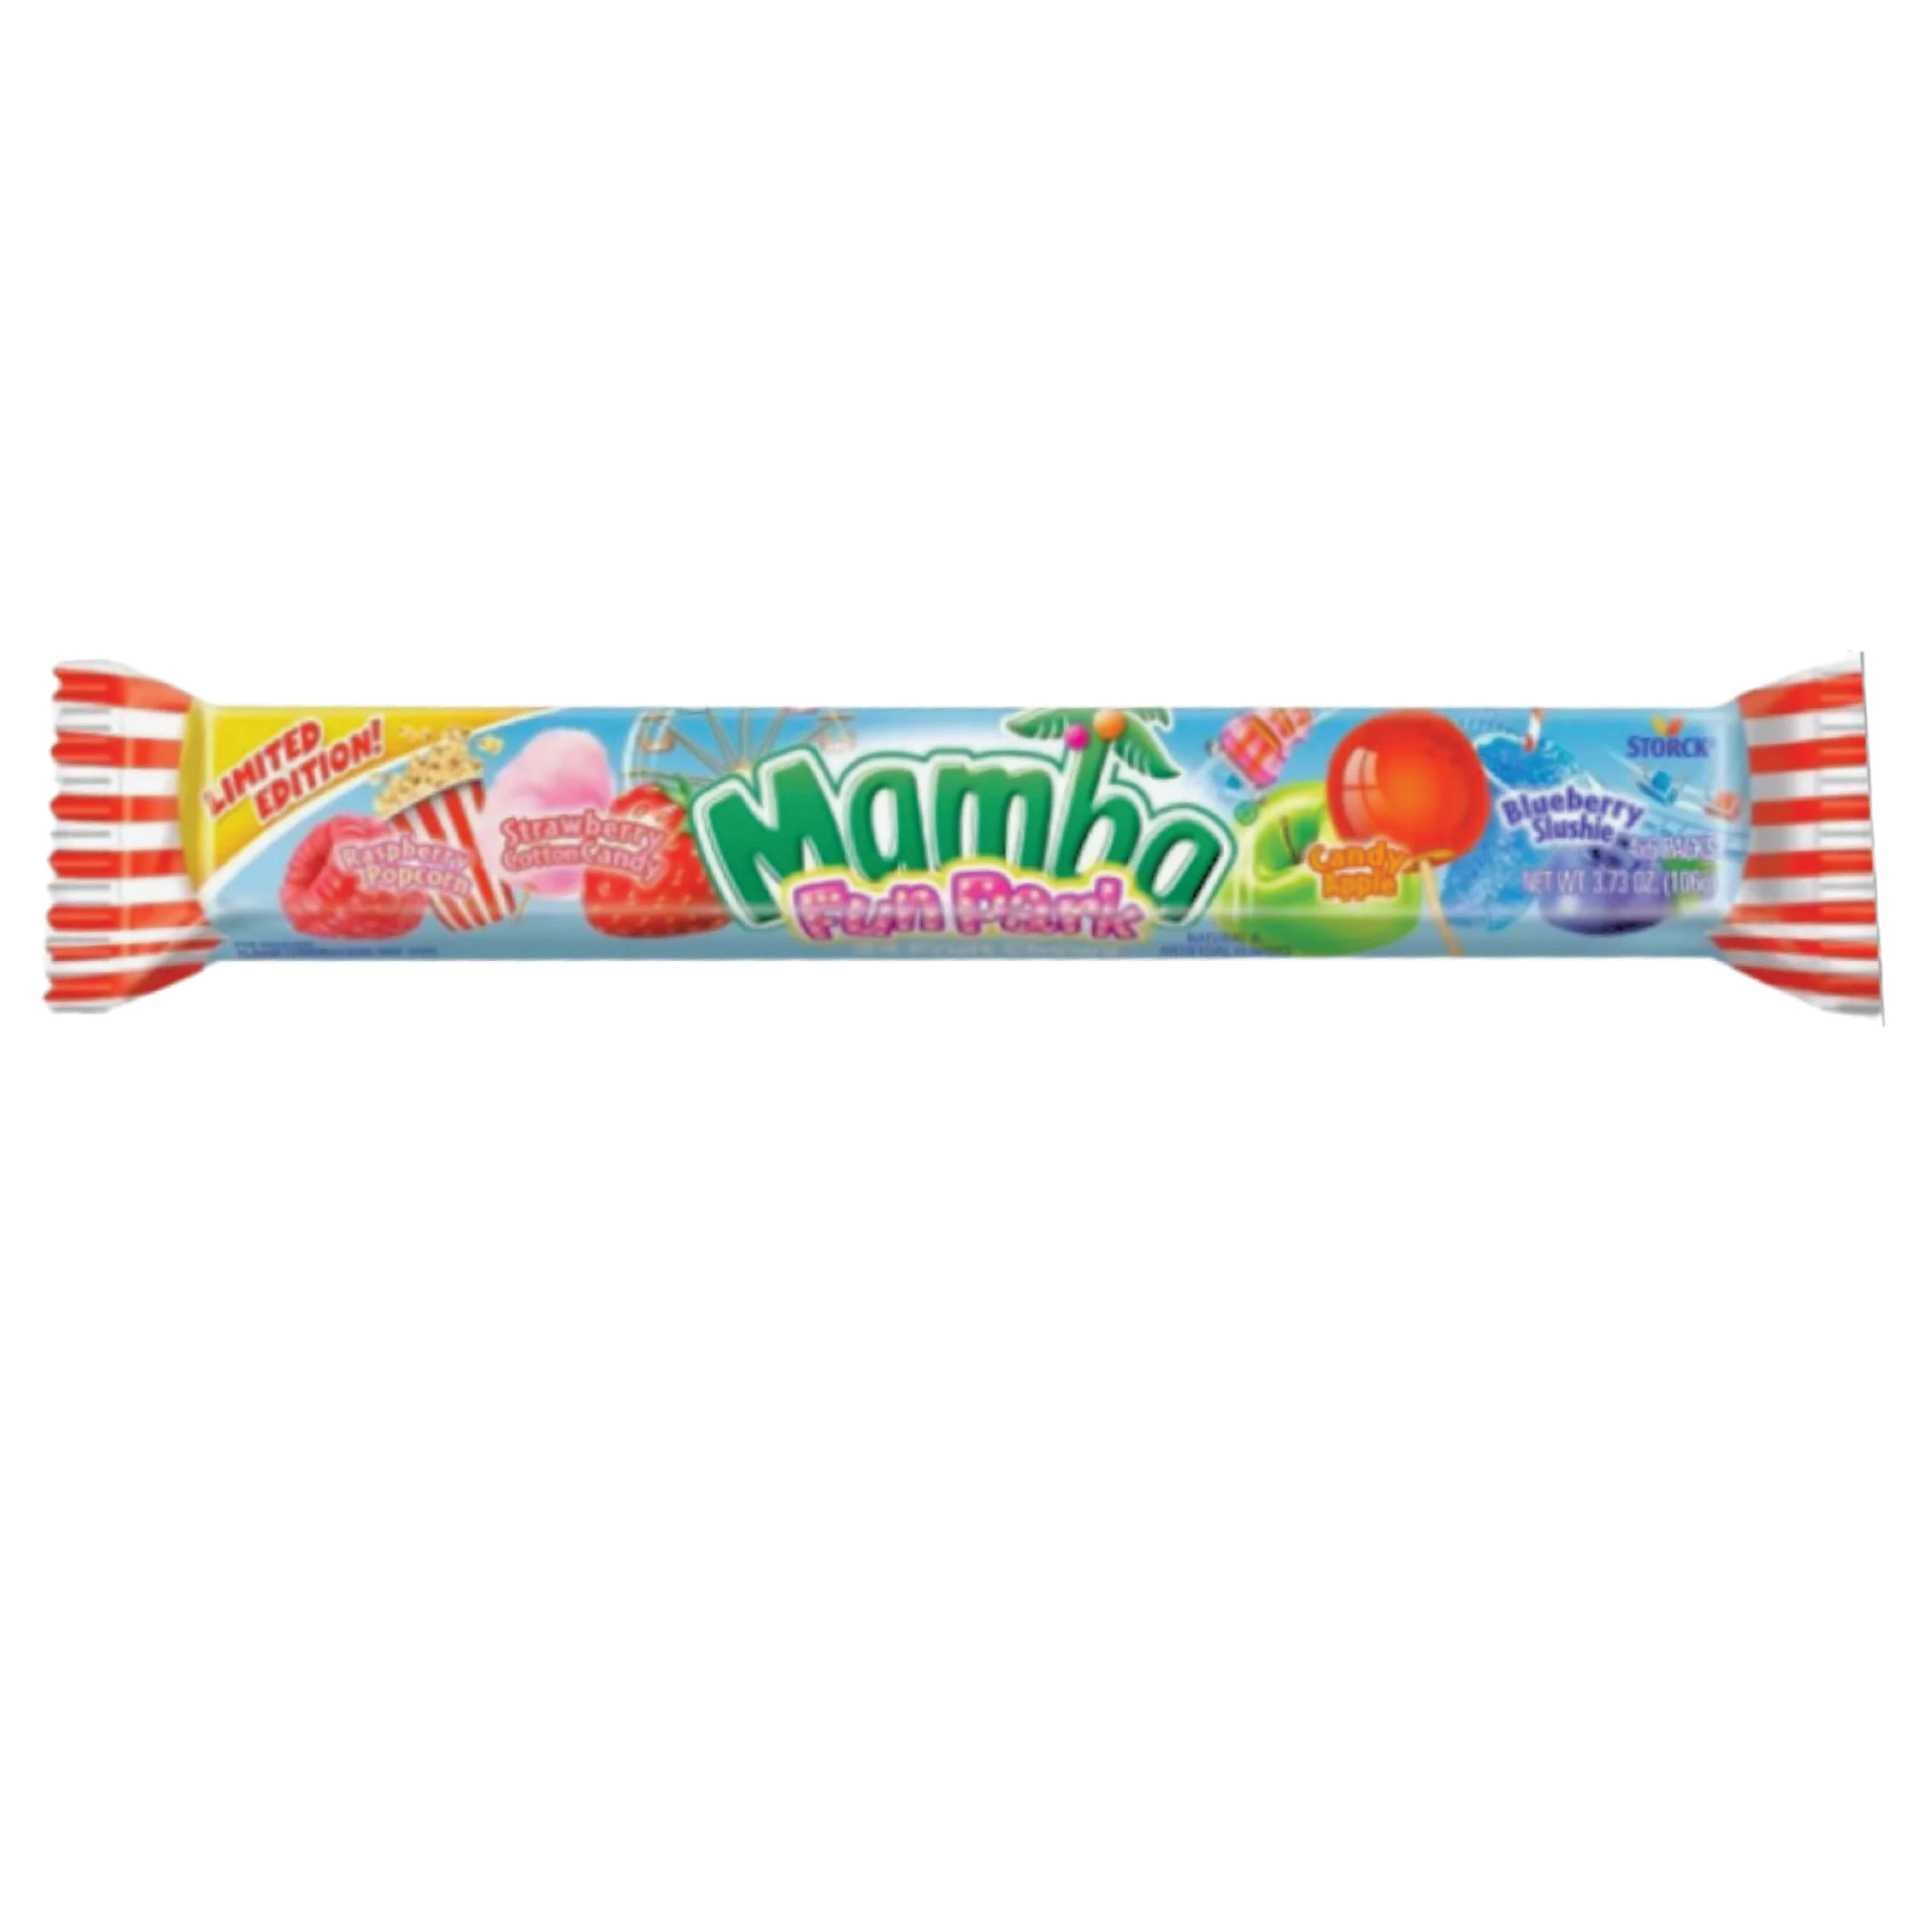 Mamba Limited Edition Fun Park King Size Fruit Chews Bar 3.73oz